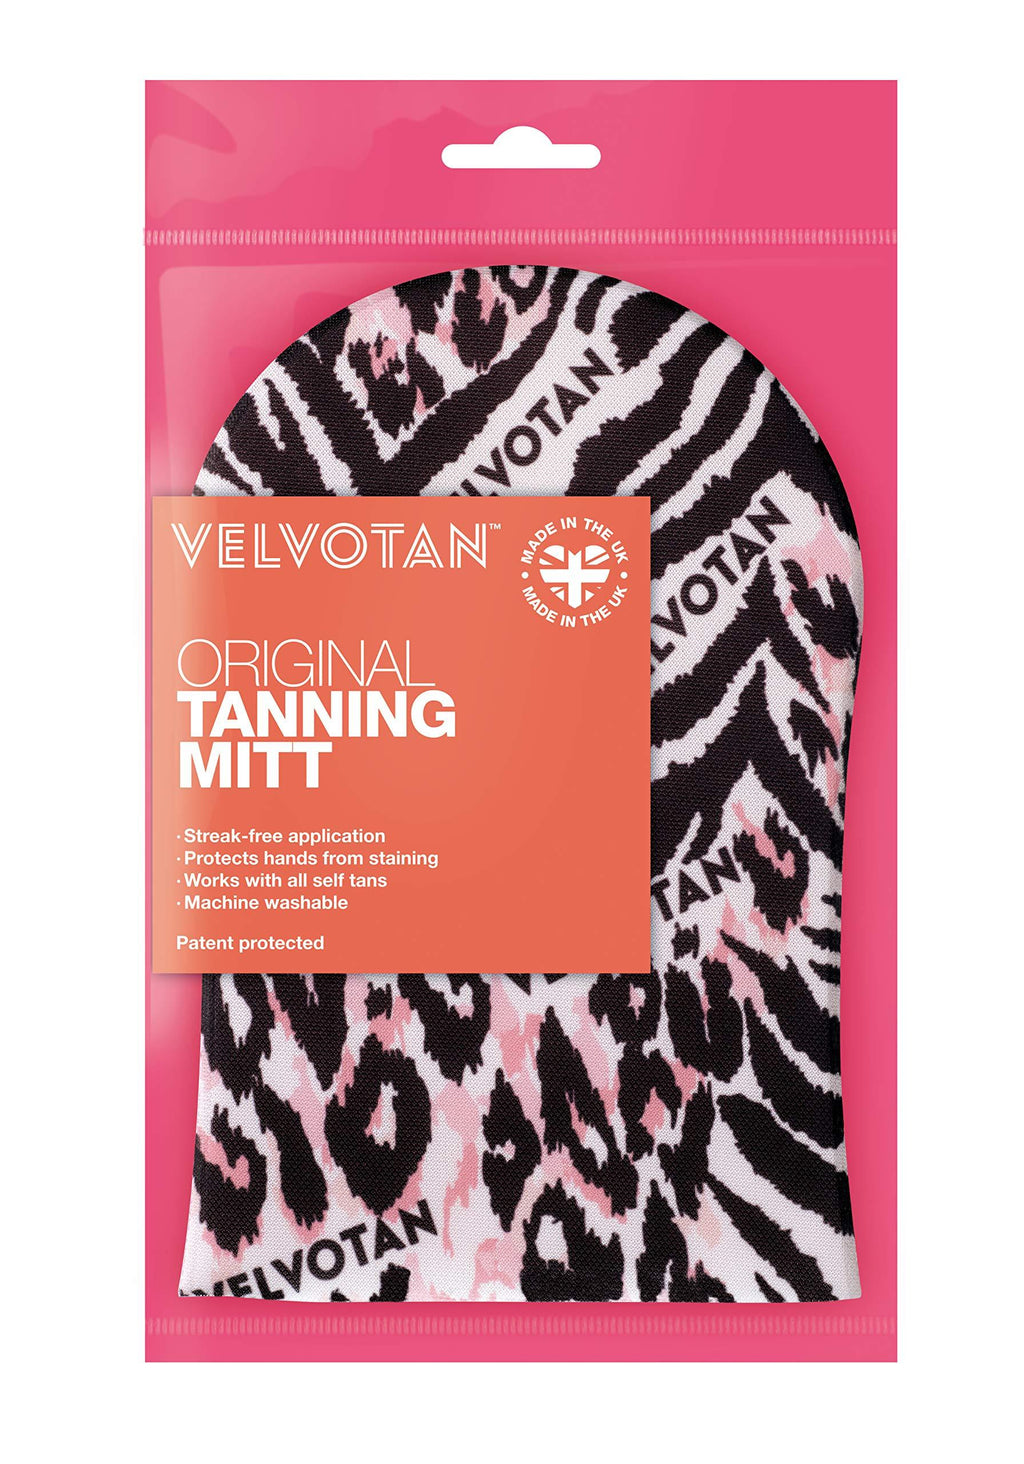 Velvotan PARTY ANIMALS The Original Tanning Mitt Self Tanning Applicator Clever Lotion Resistant Reusable Sleek Application, Animalier - NewNest Australia